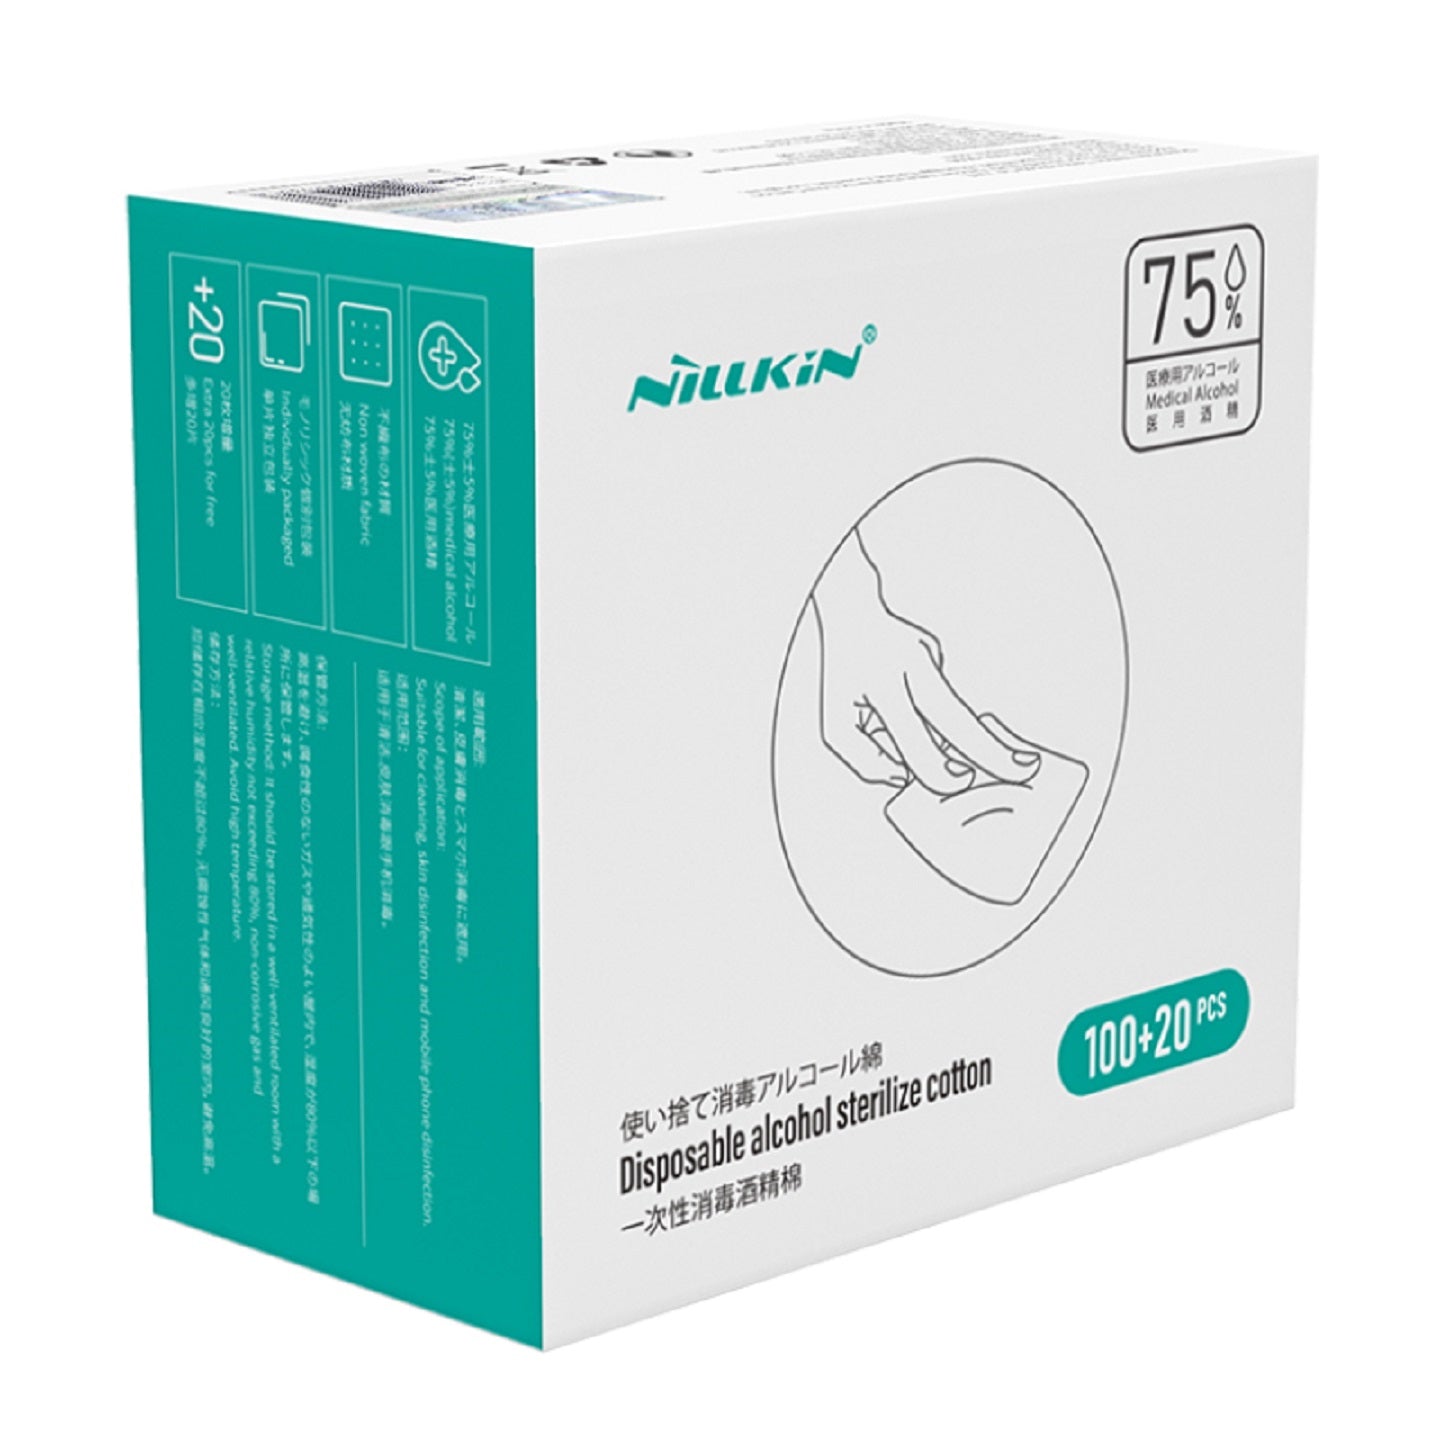 Nillkin 75%醫用滅菌消毒酒精棉6x6cm(120片) (多盒優惠)